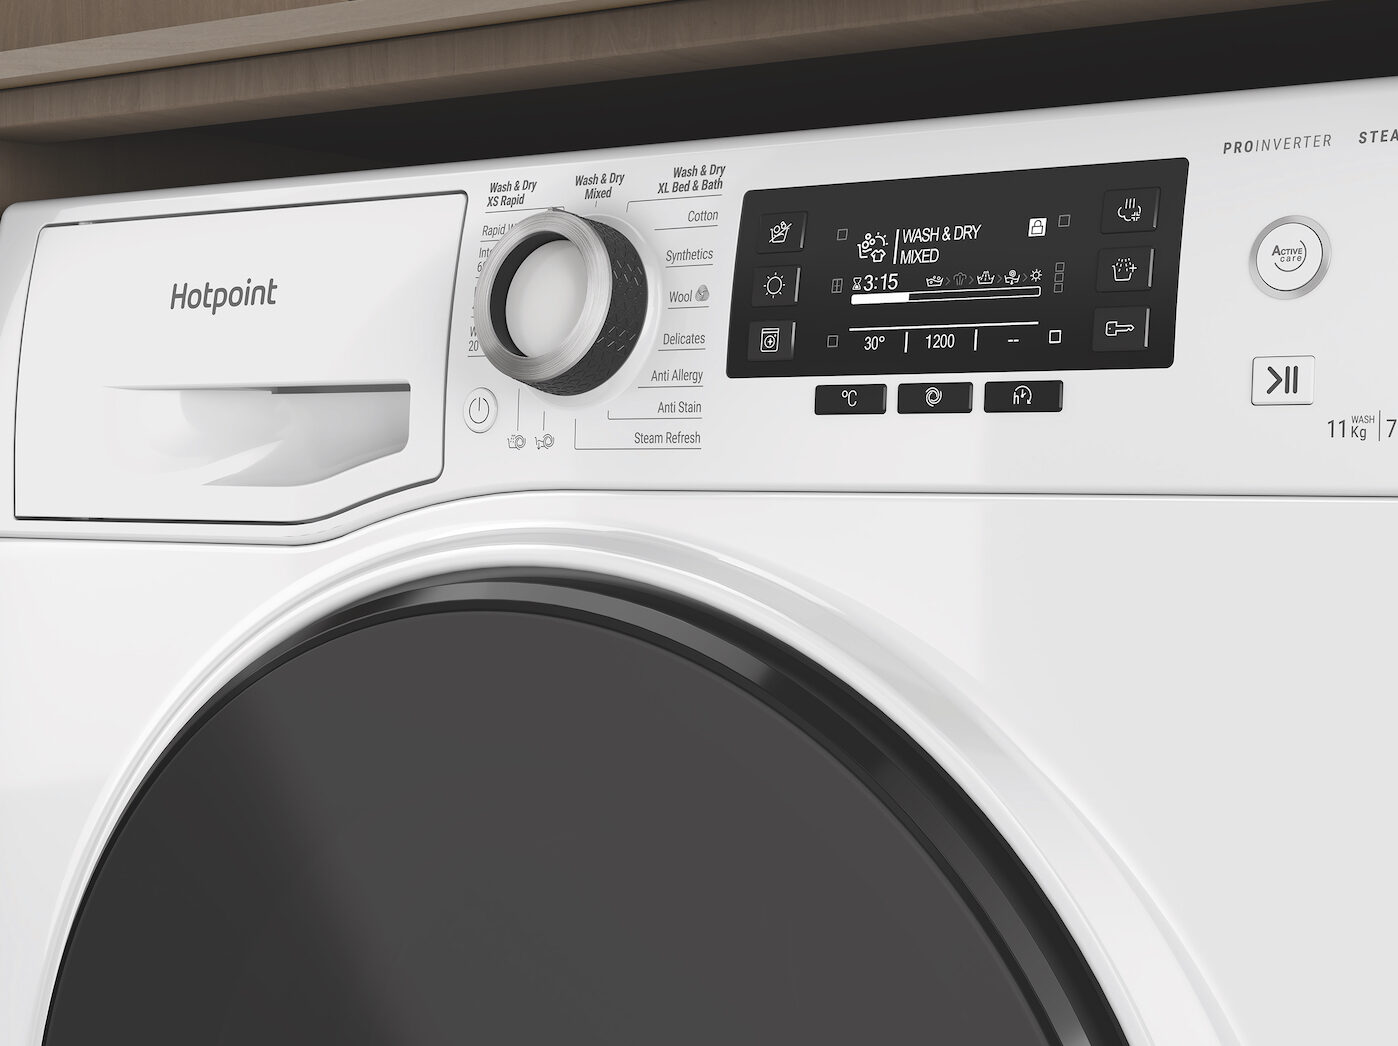 A Hotpoint washing machine control panel